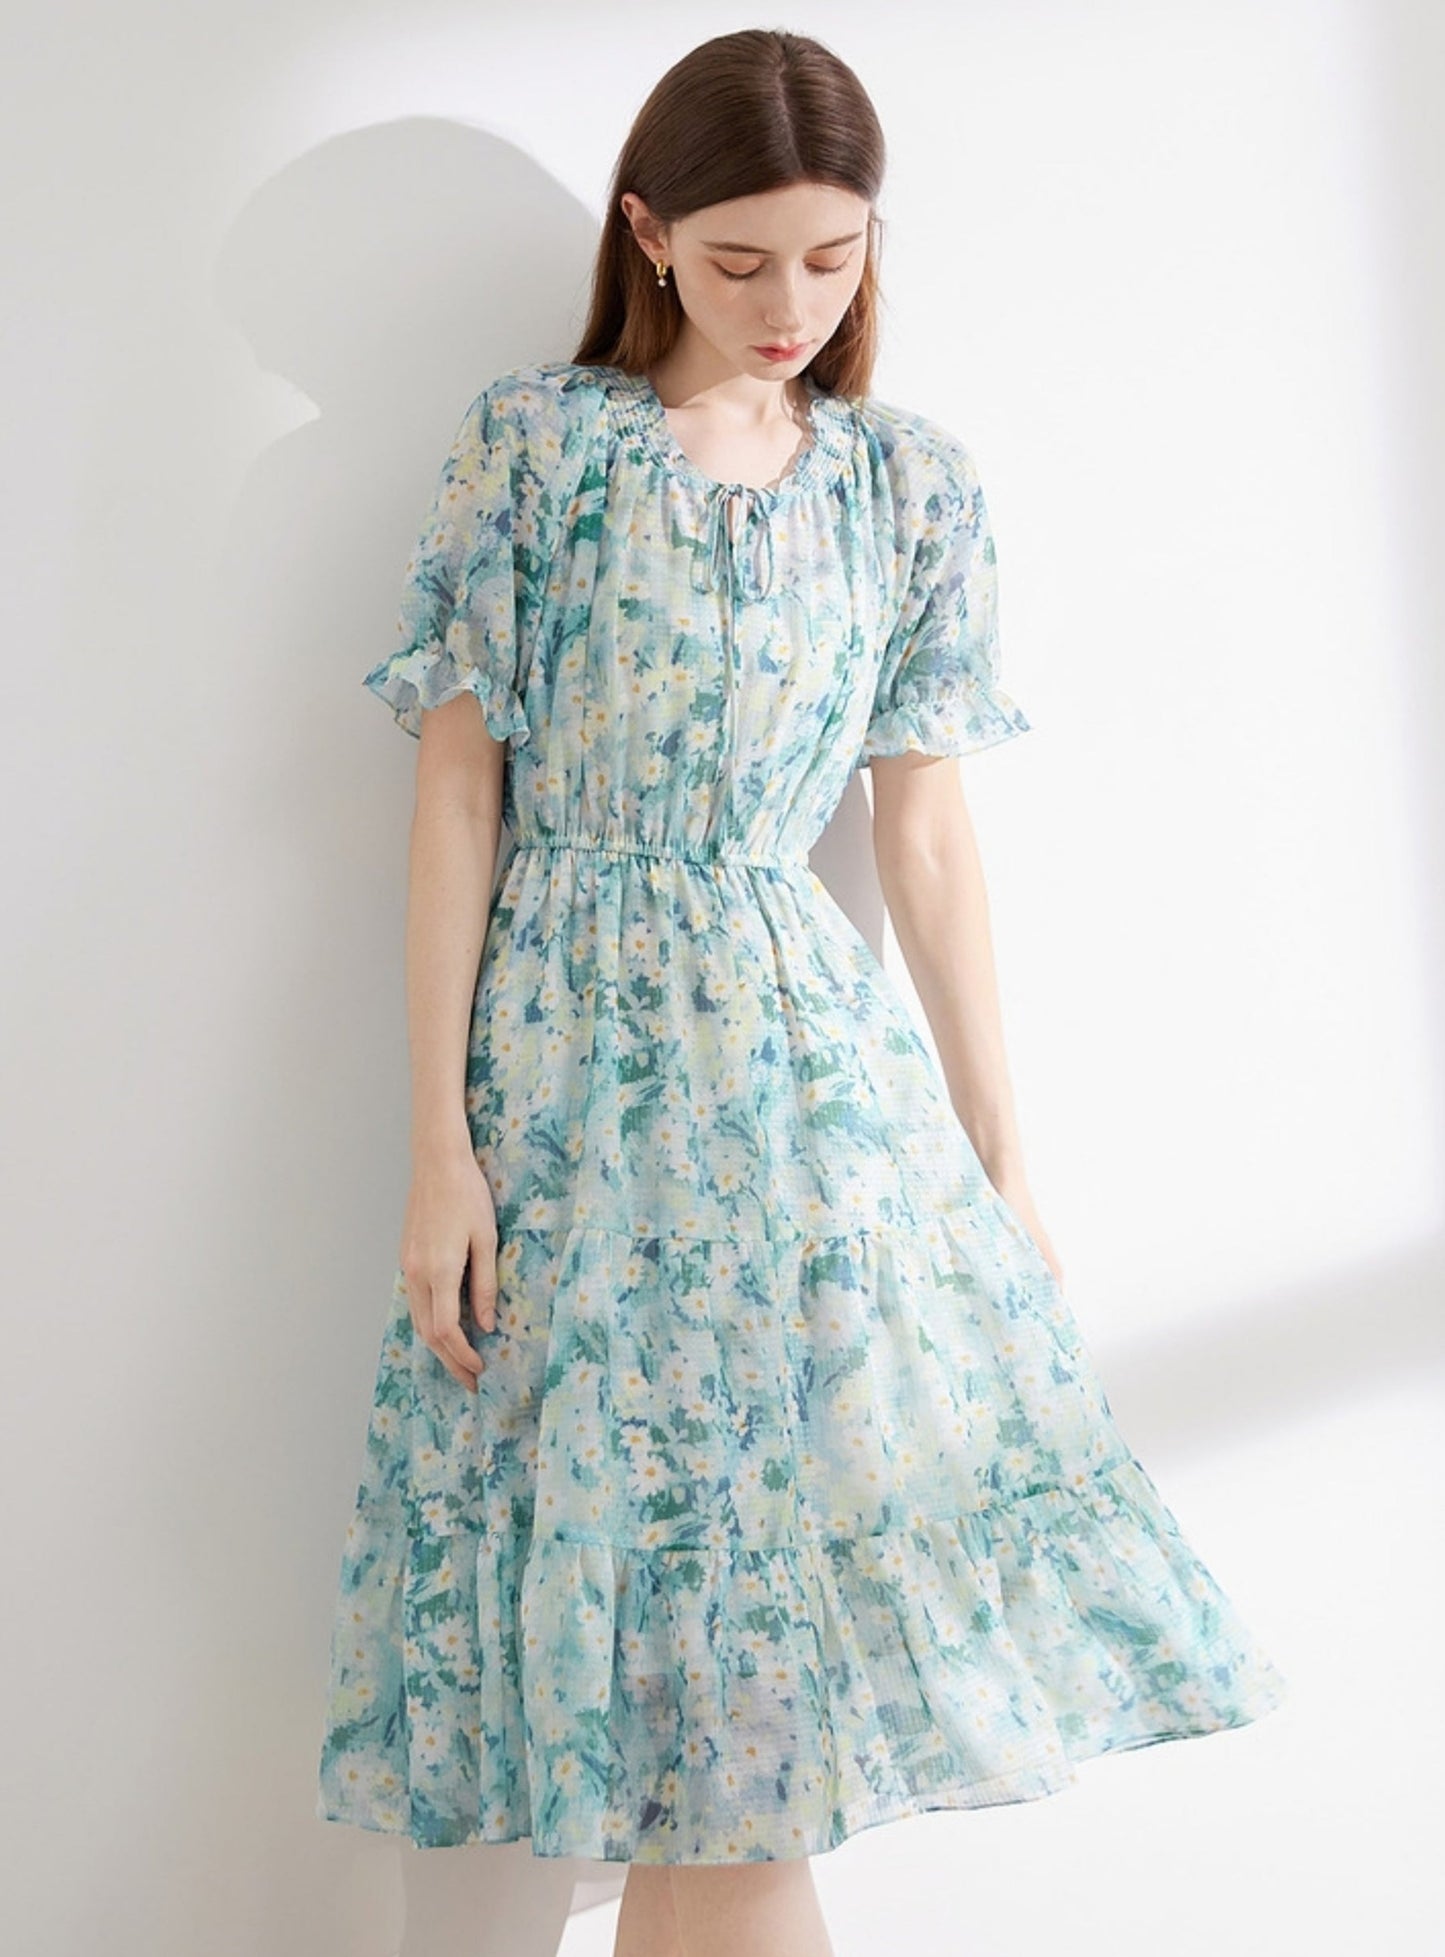 Pressed Pleats Gentle A-Line Floral Dress